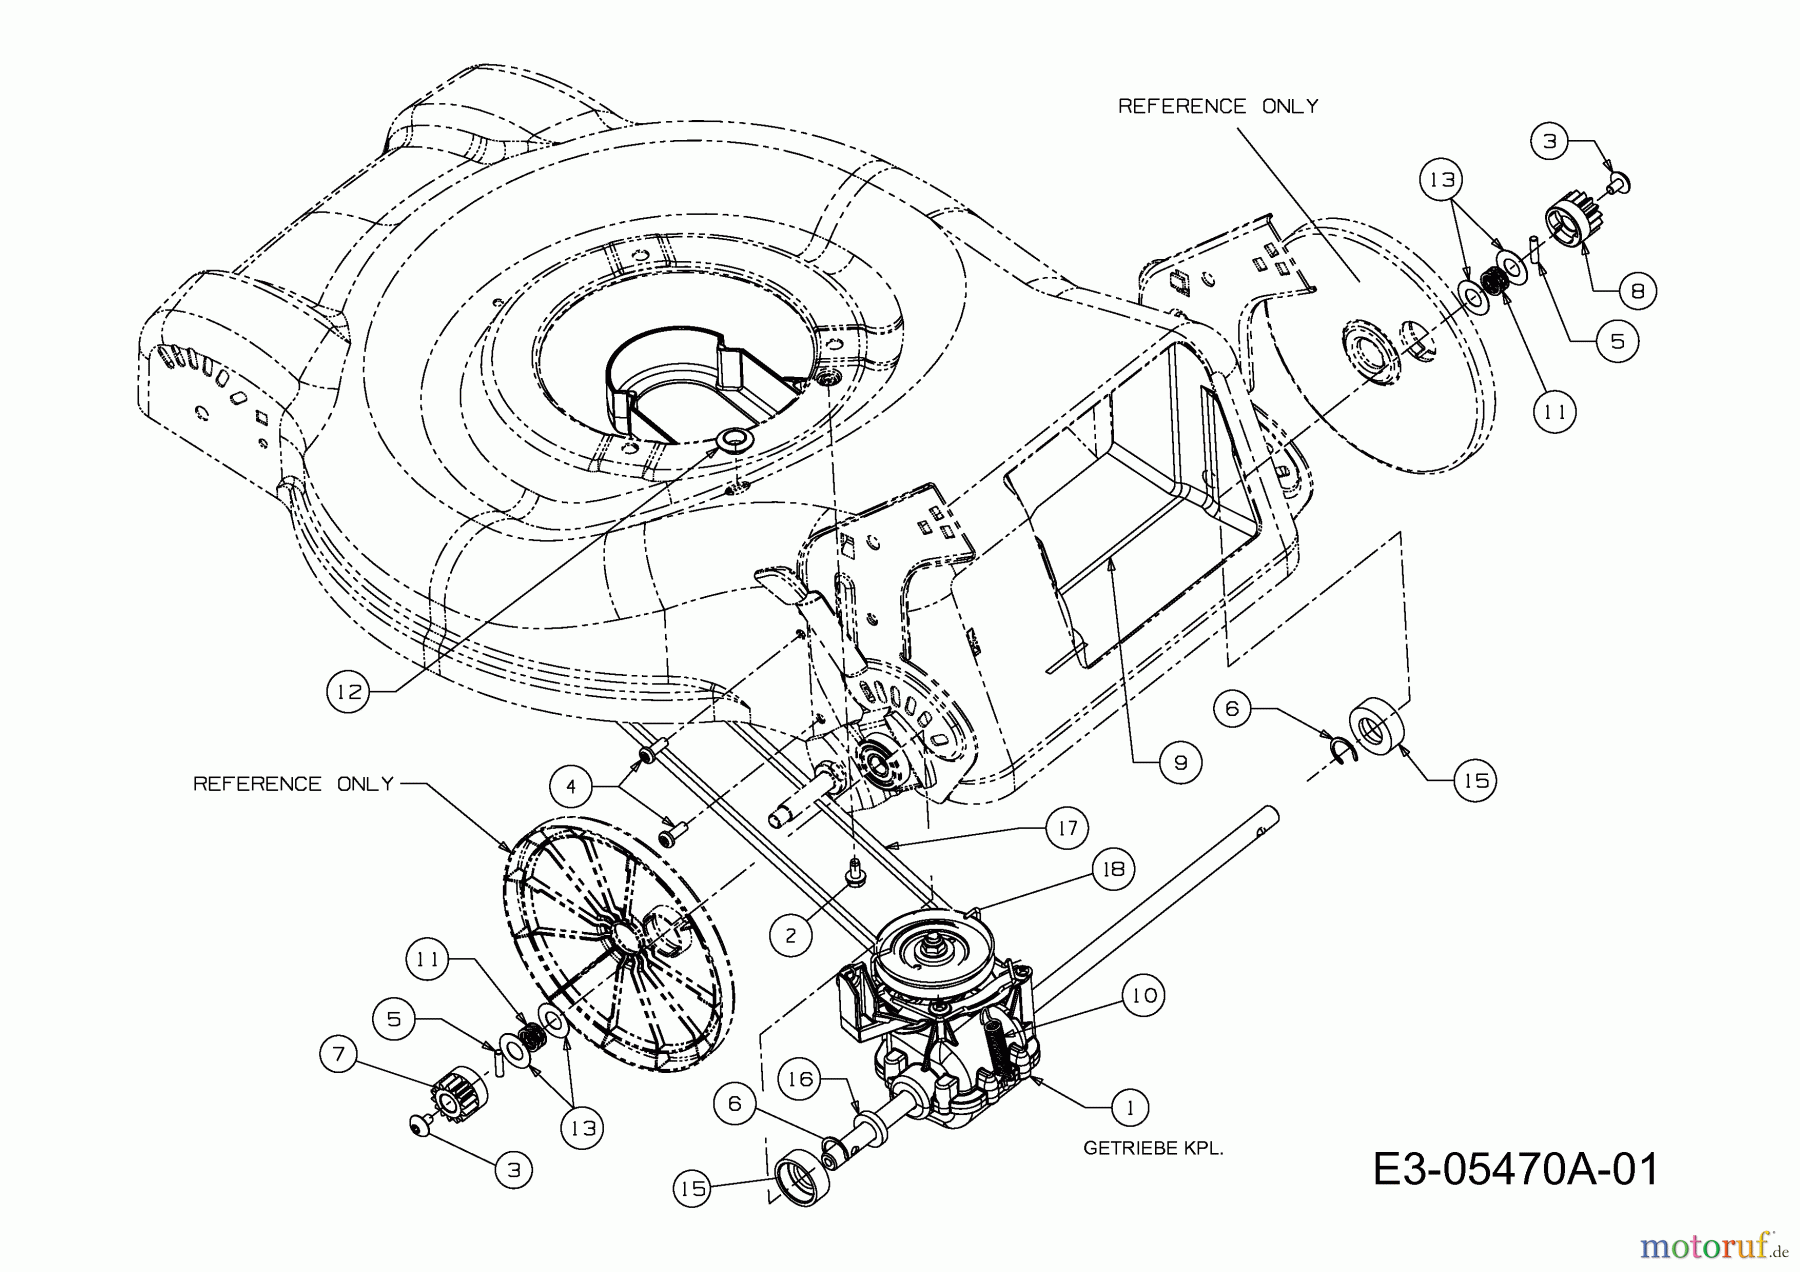  Mastercut Motormäher mit Antrieb SP 460 BL 12C-J20G659  (2010) Getriebe